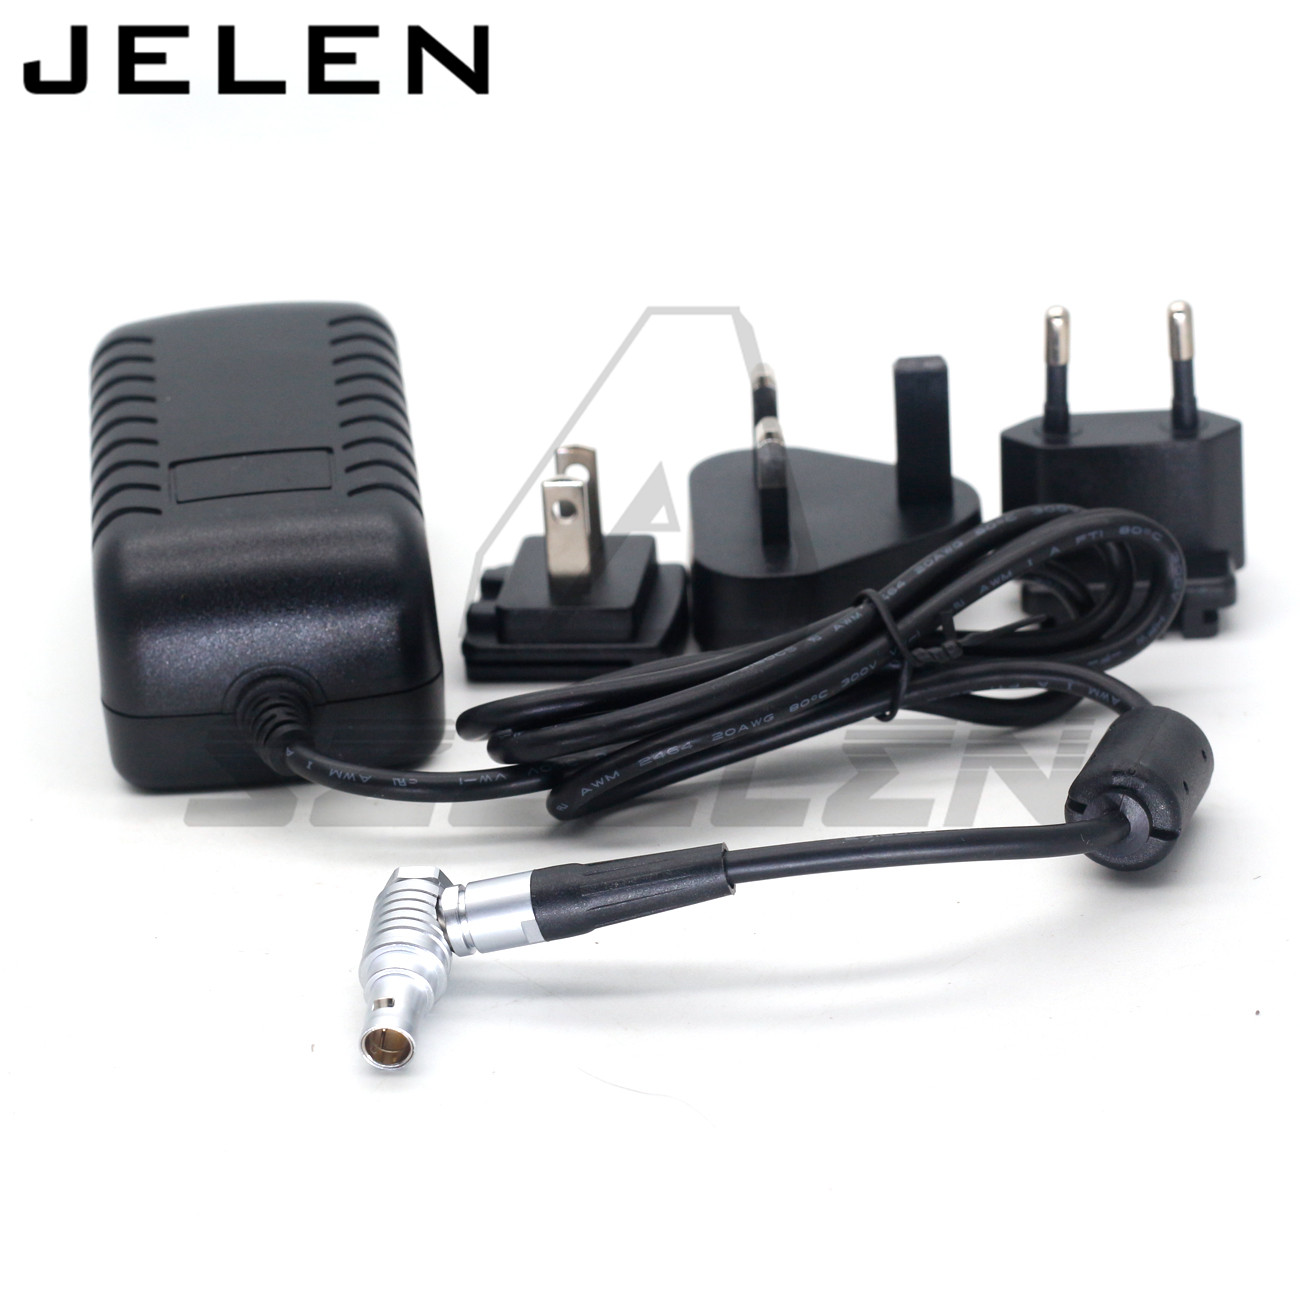 American and European regulations 110 220V adapter to 12V 2 pin elbow Weigu image transmission power cord Teradek polaishop 2